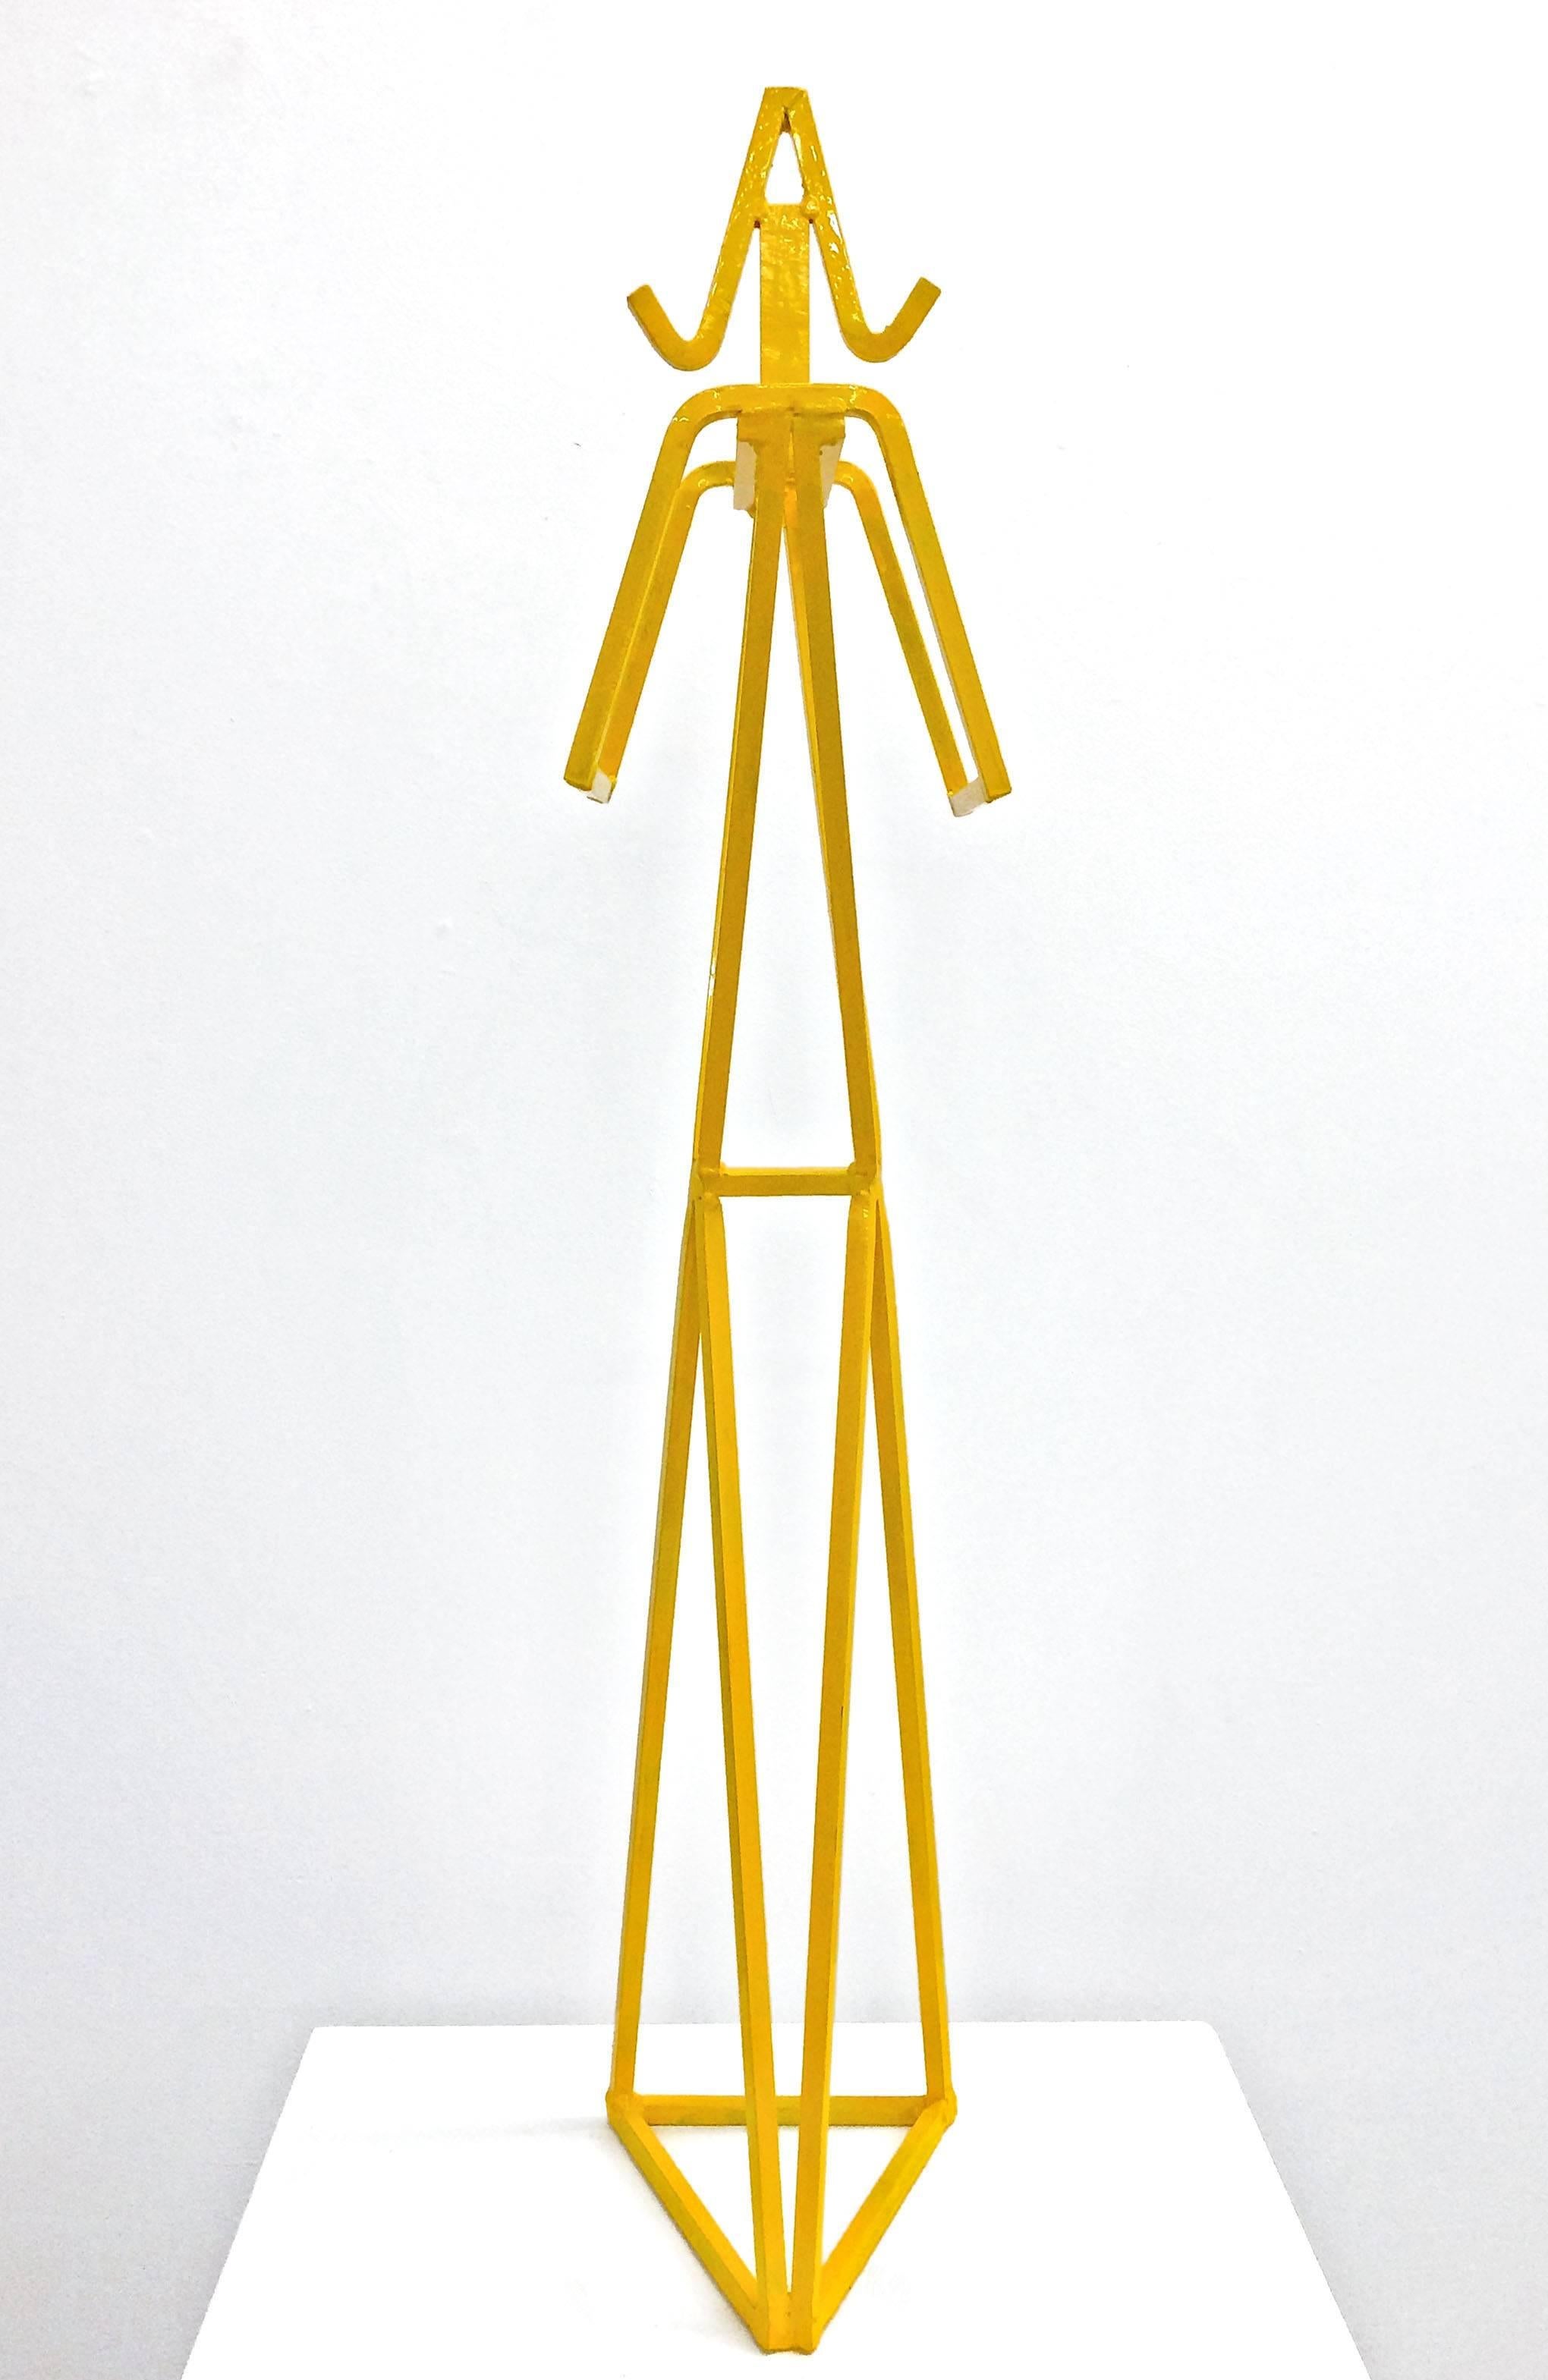 Kyle Breitenbach Figurative Sculpture - Untitled (Yellow)